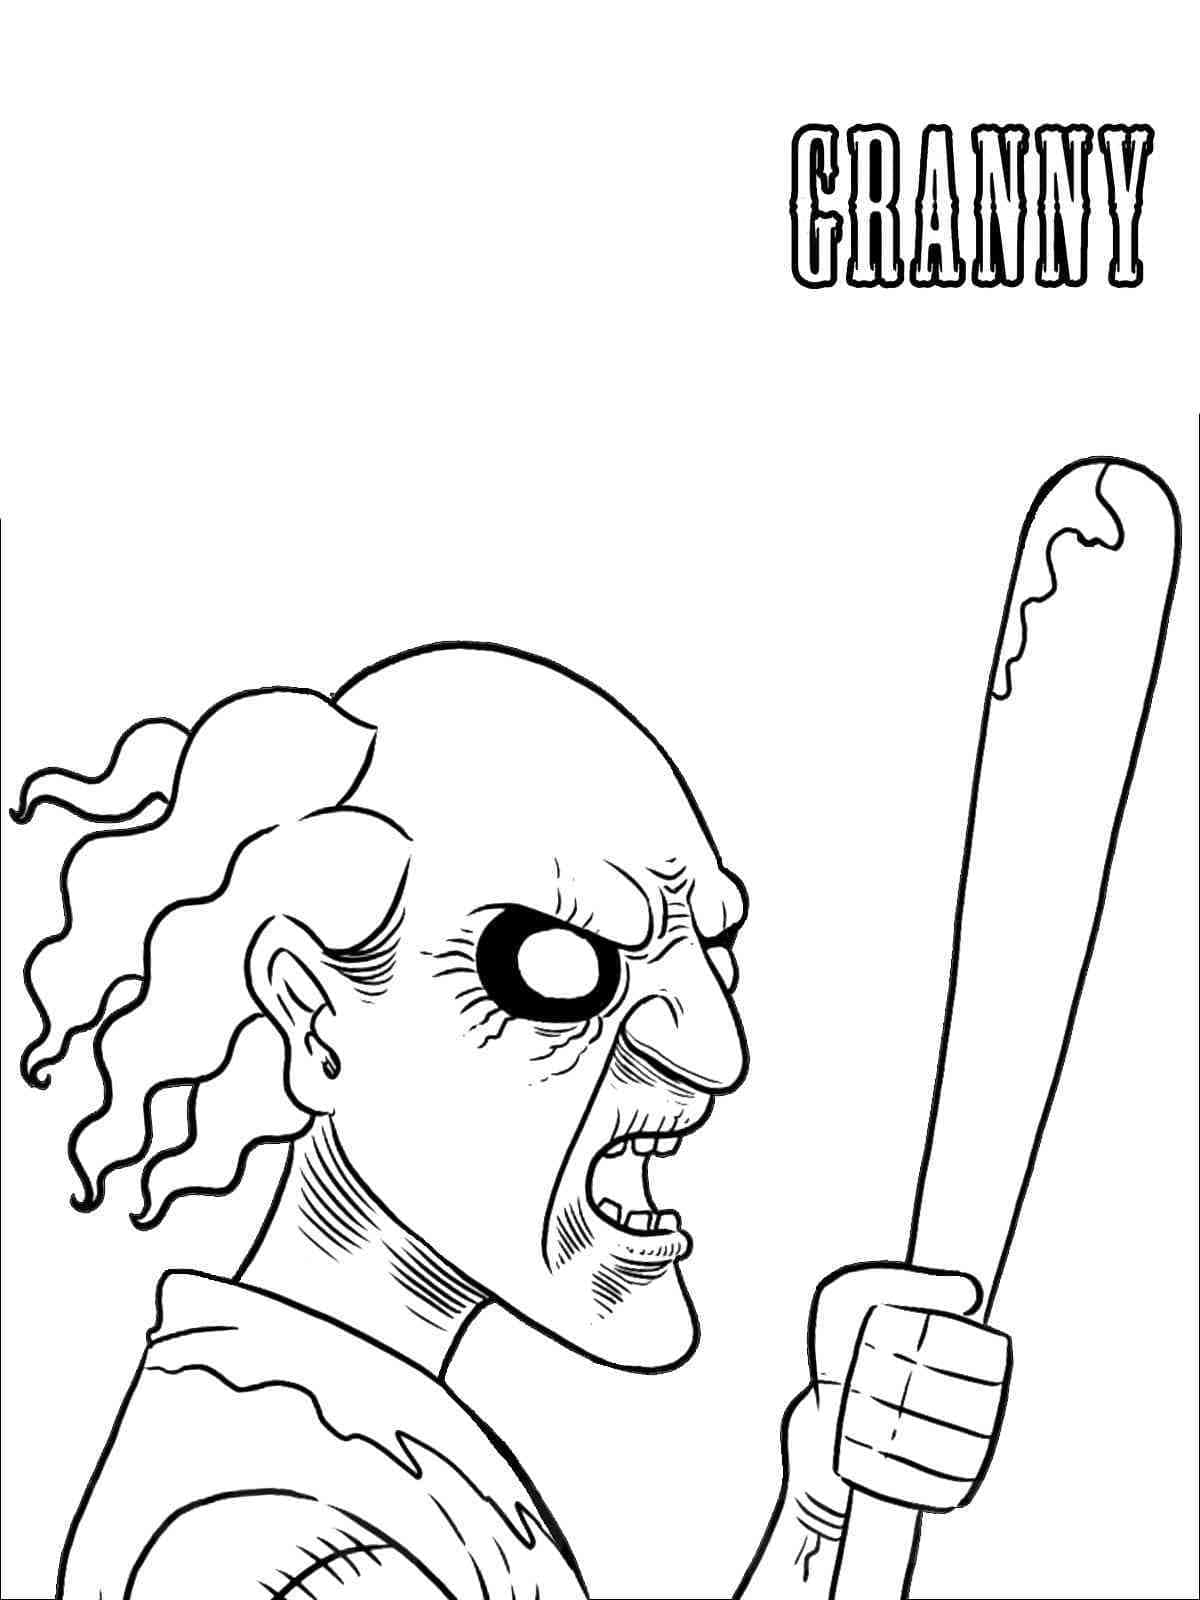 Discover 69 granny horror game sketch best  seveneduvn